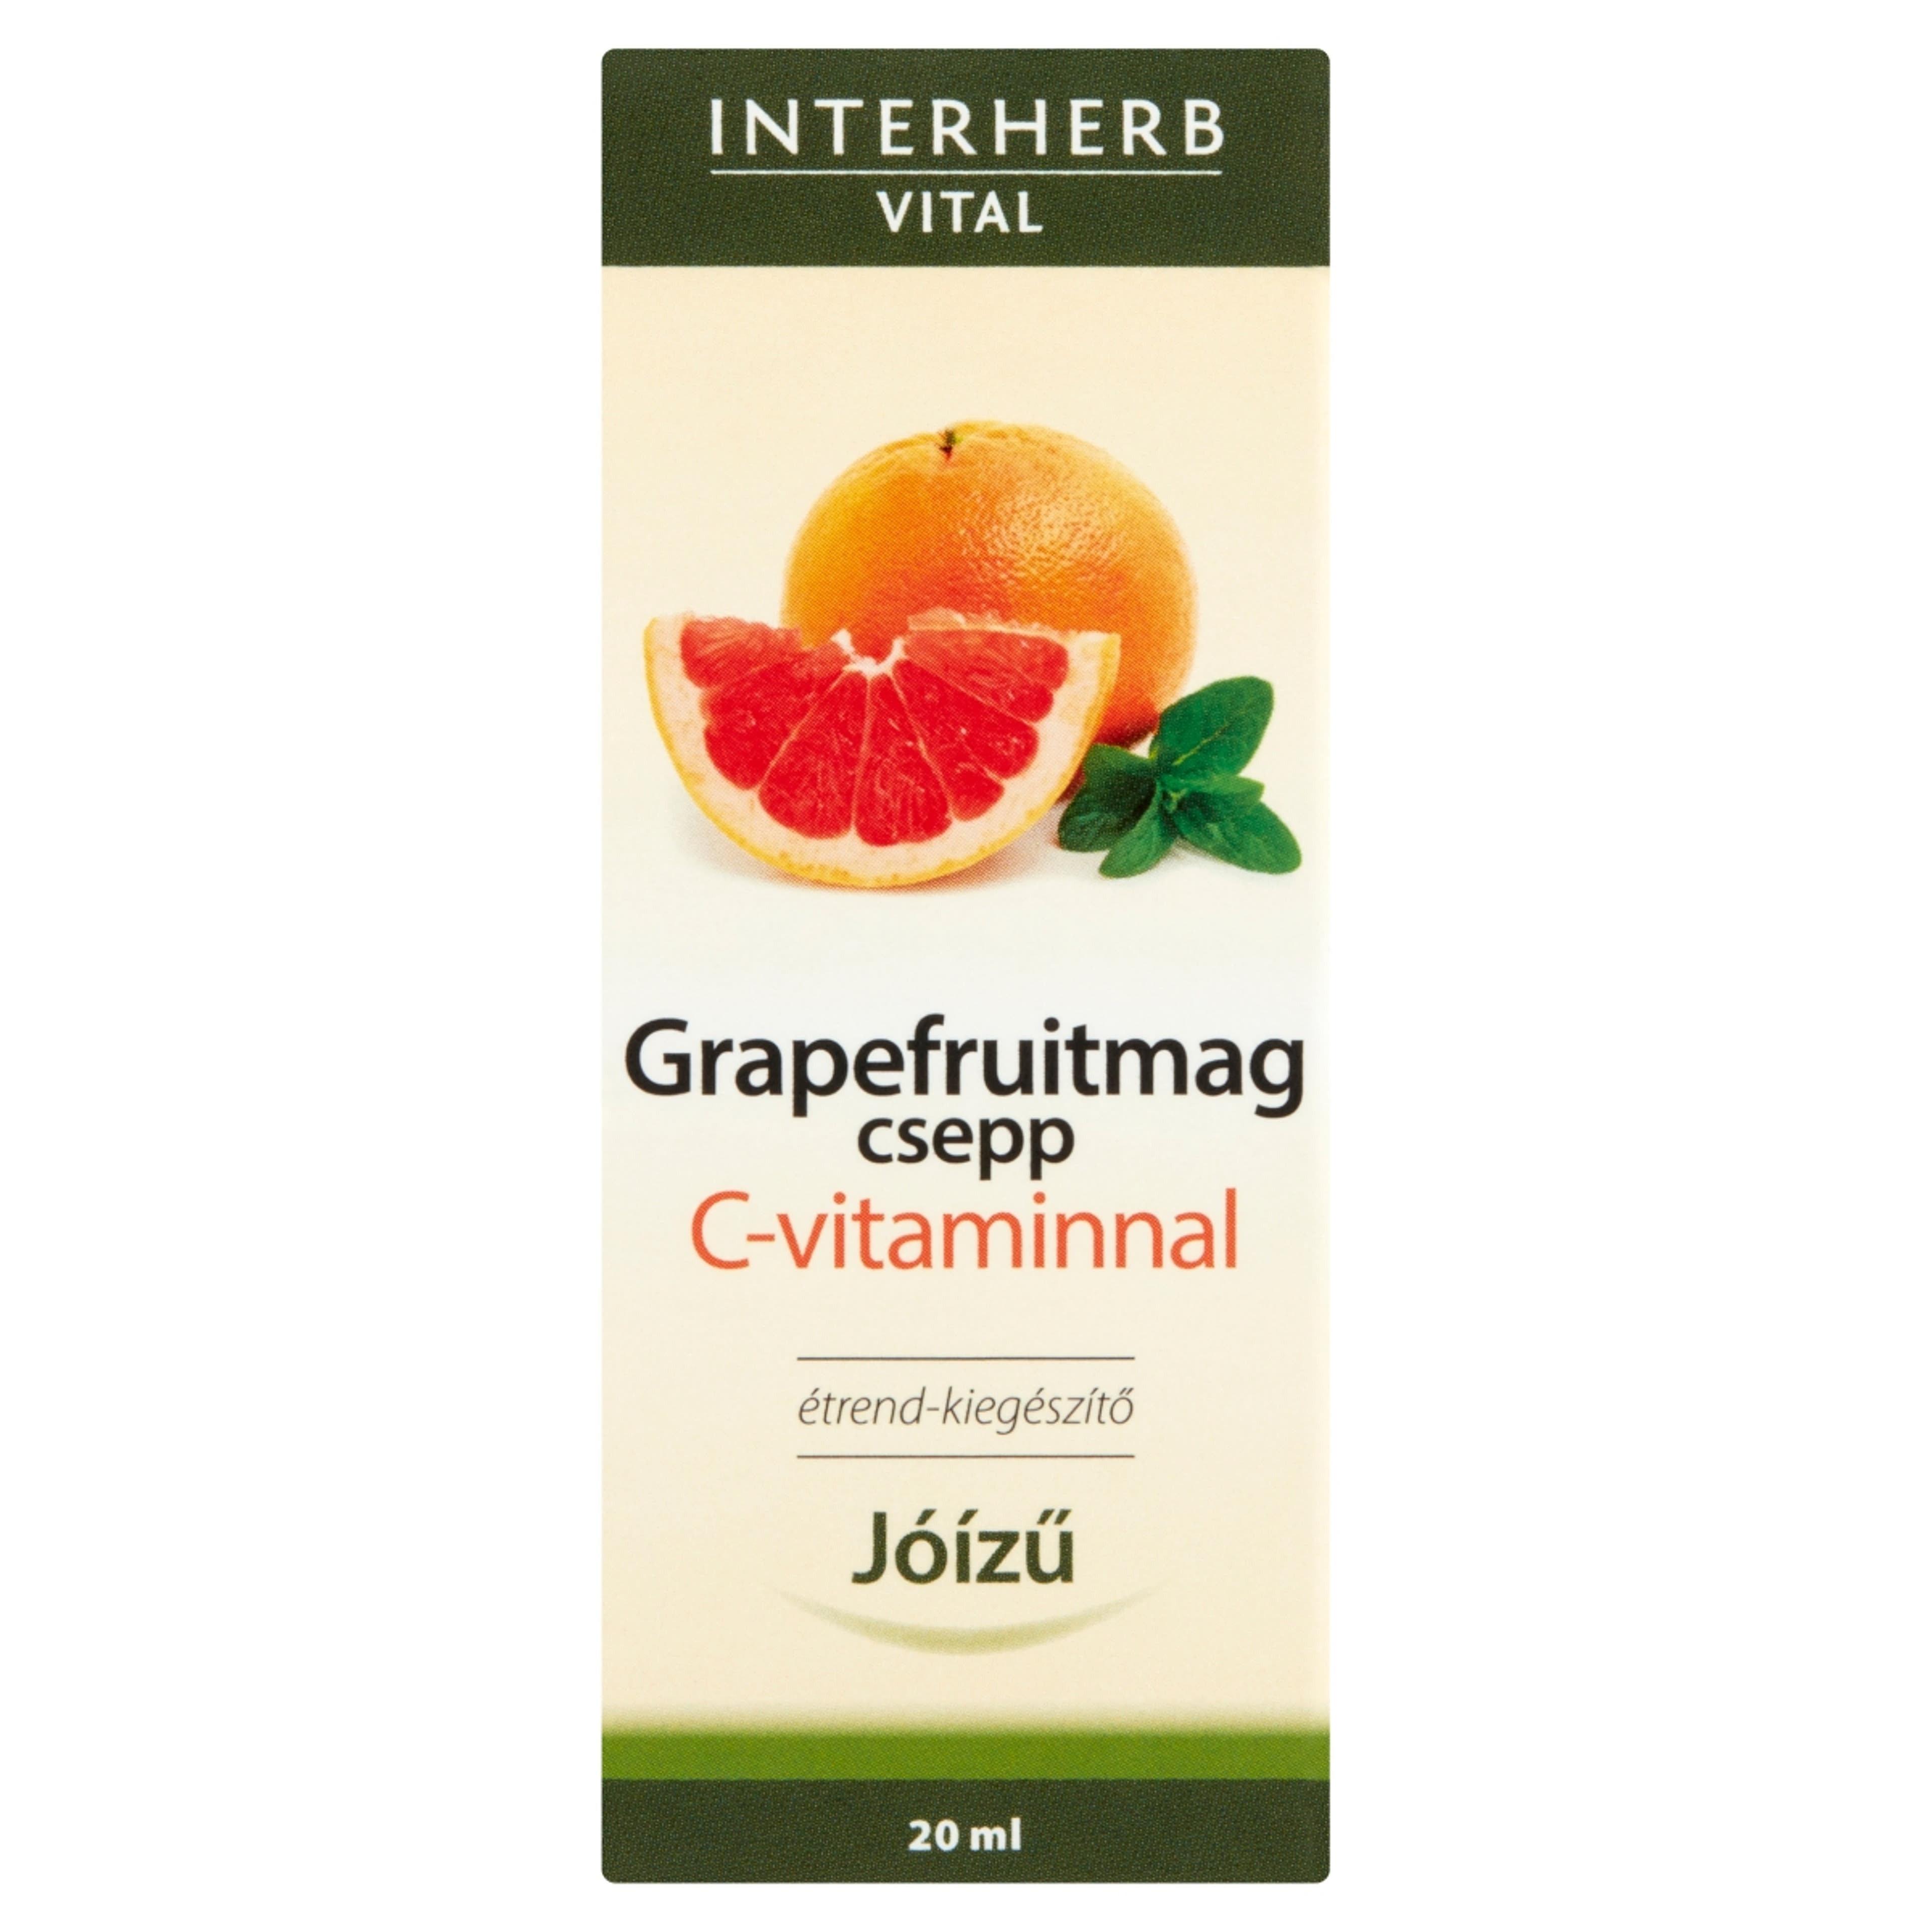 Interherb Grapefruitmag C-Vitaminnal Csepp - 20 ml